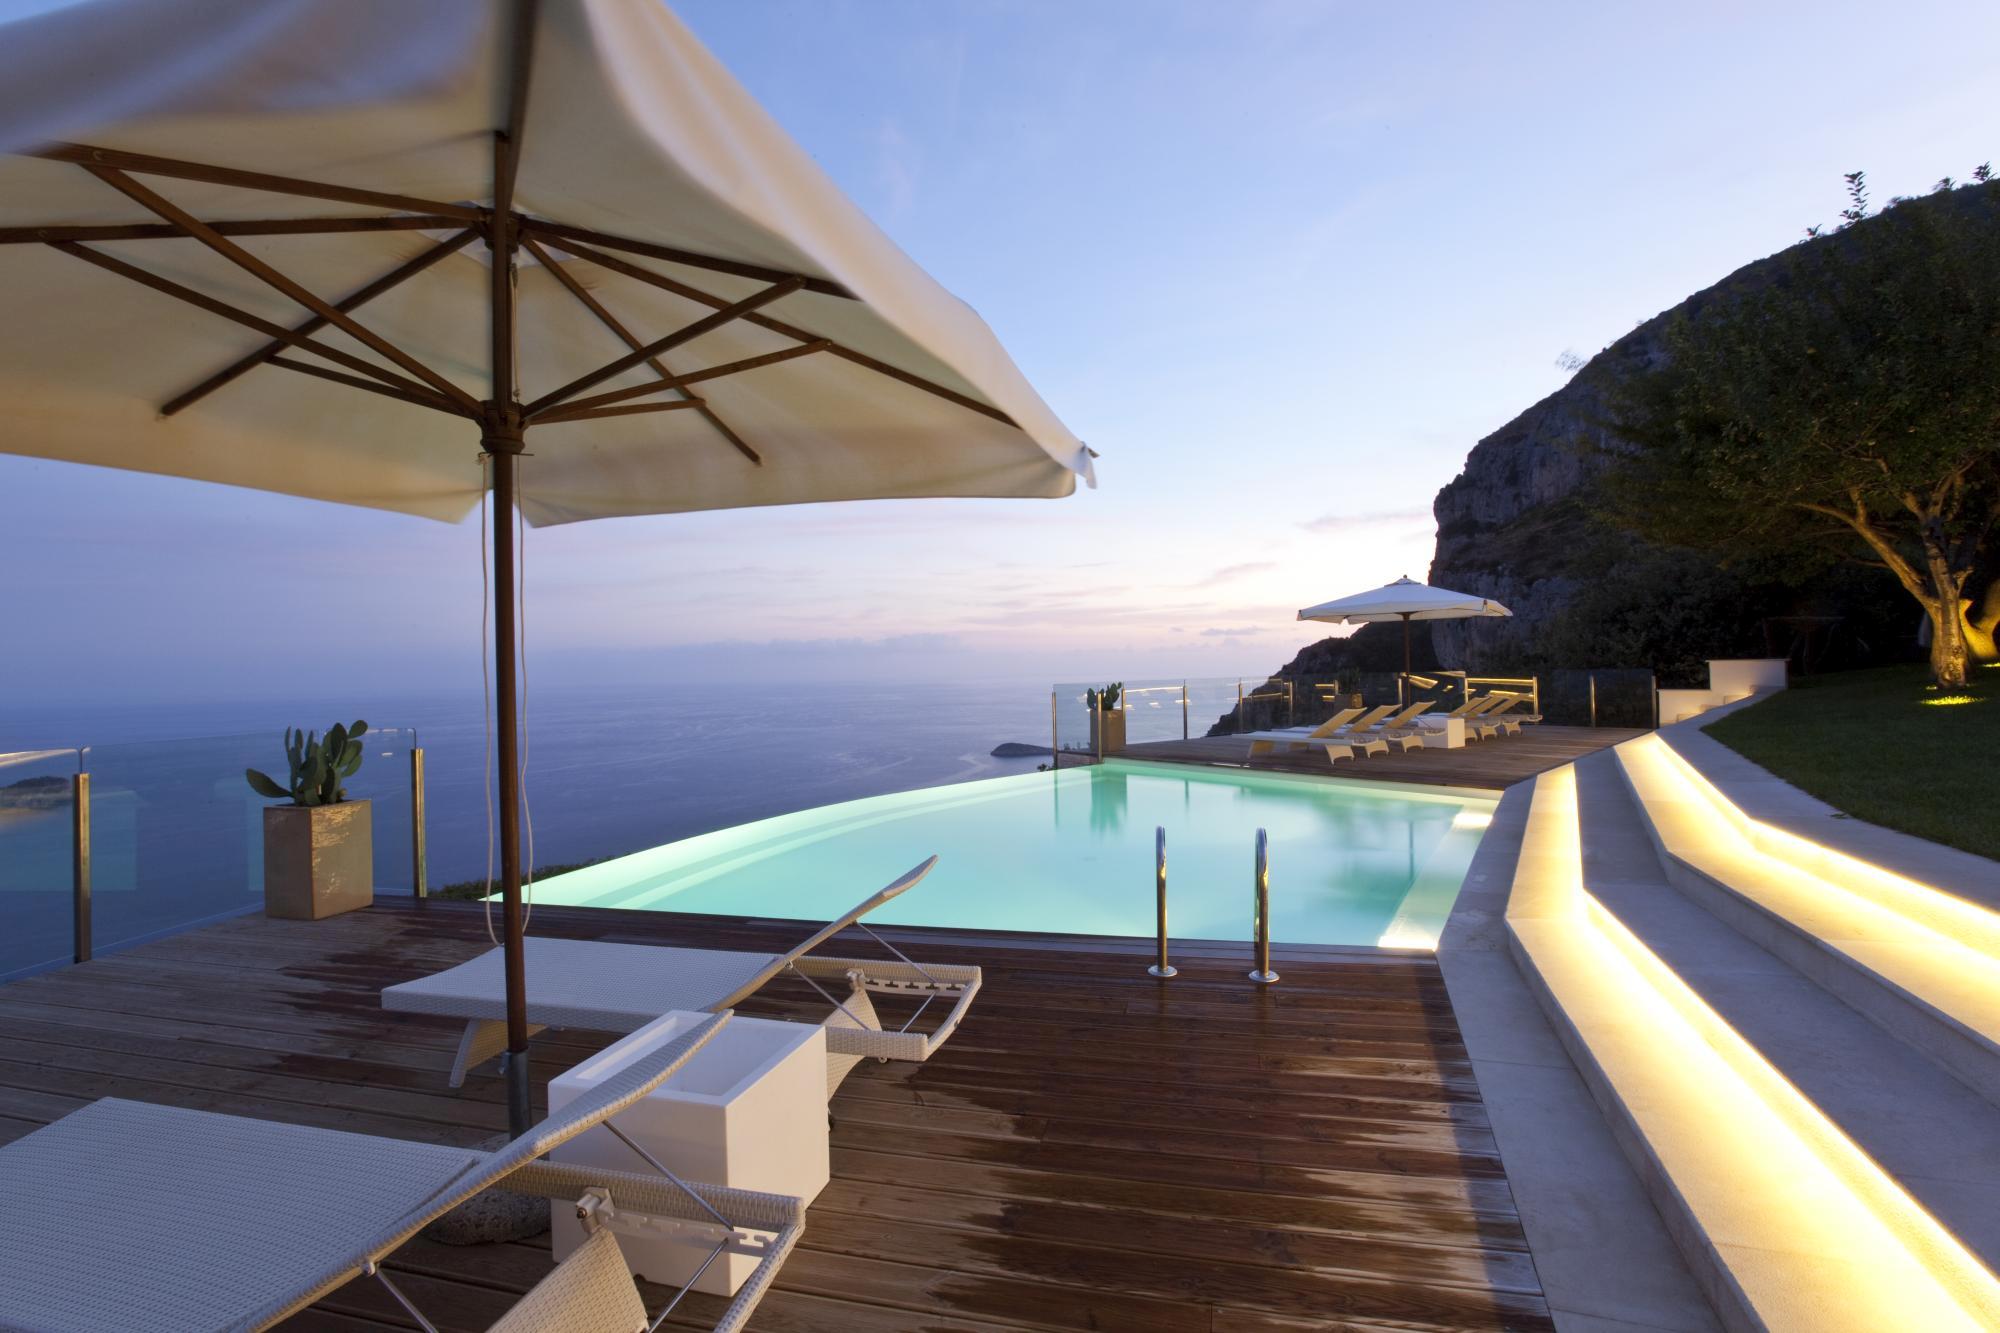 infinity pool at night at ensuite master bedroom in Villa li Galli, Amalfi Coast